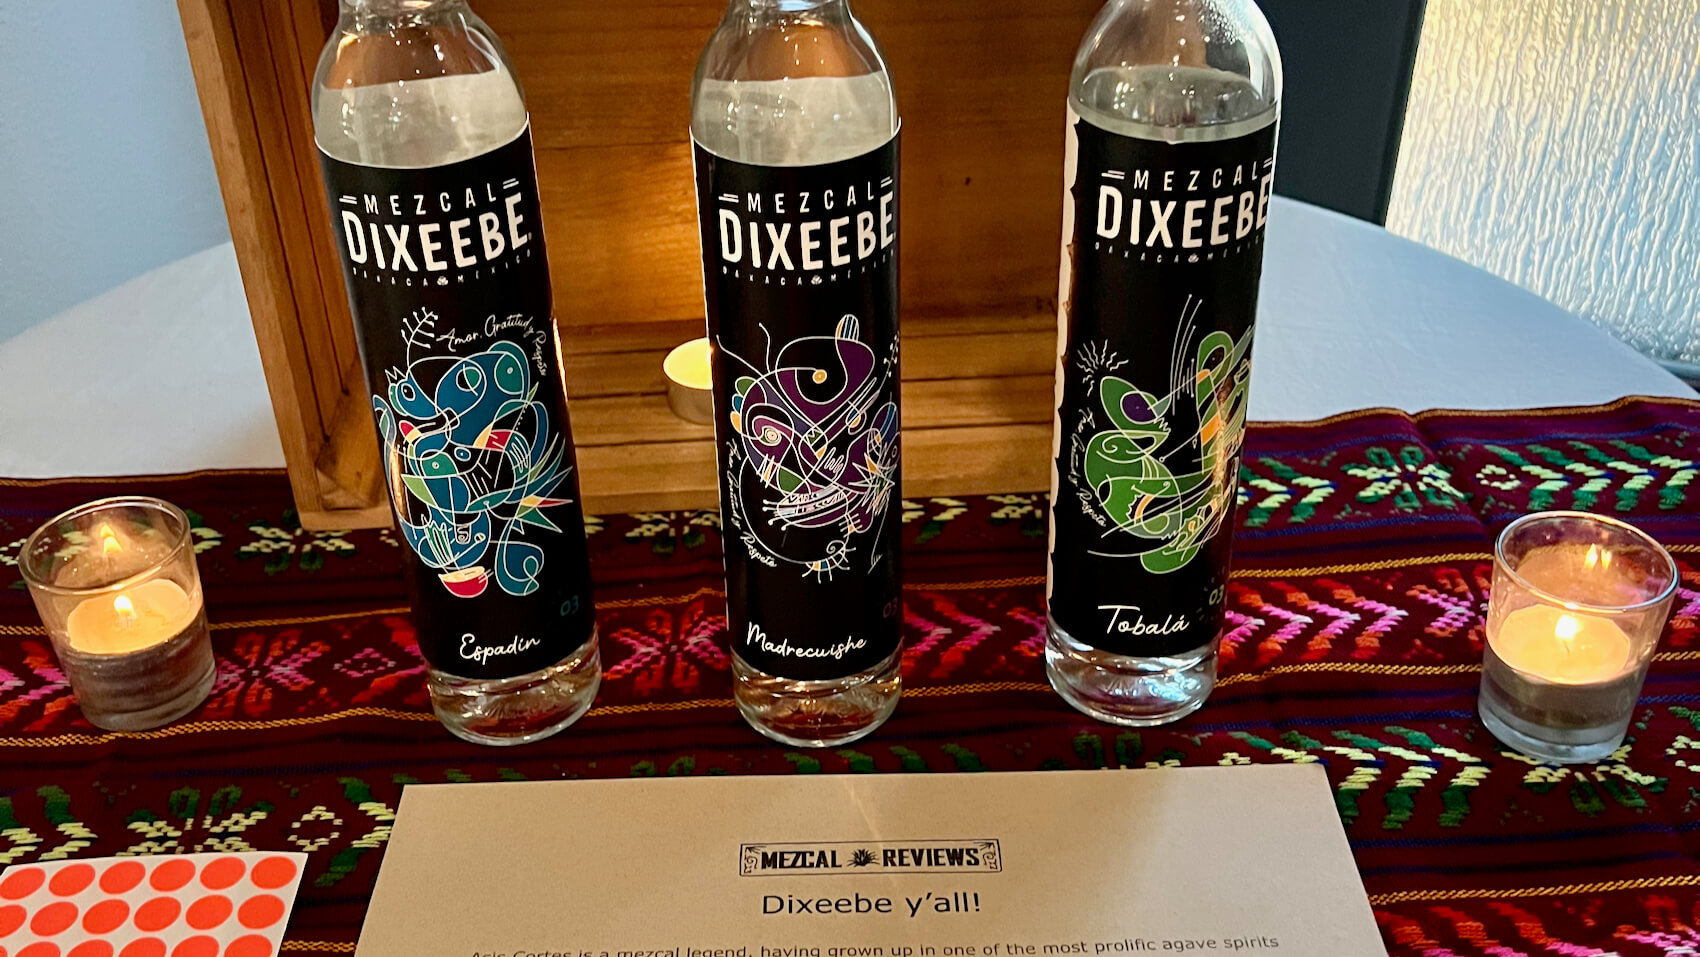 A flight of three bottles of Mezcal Dixeebe